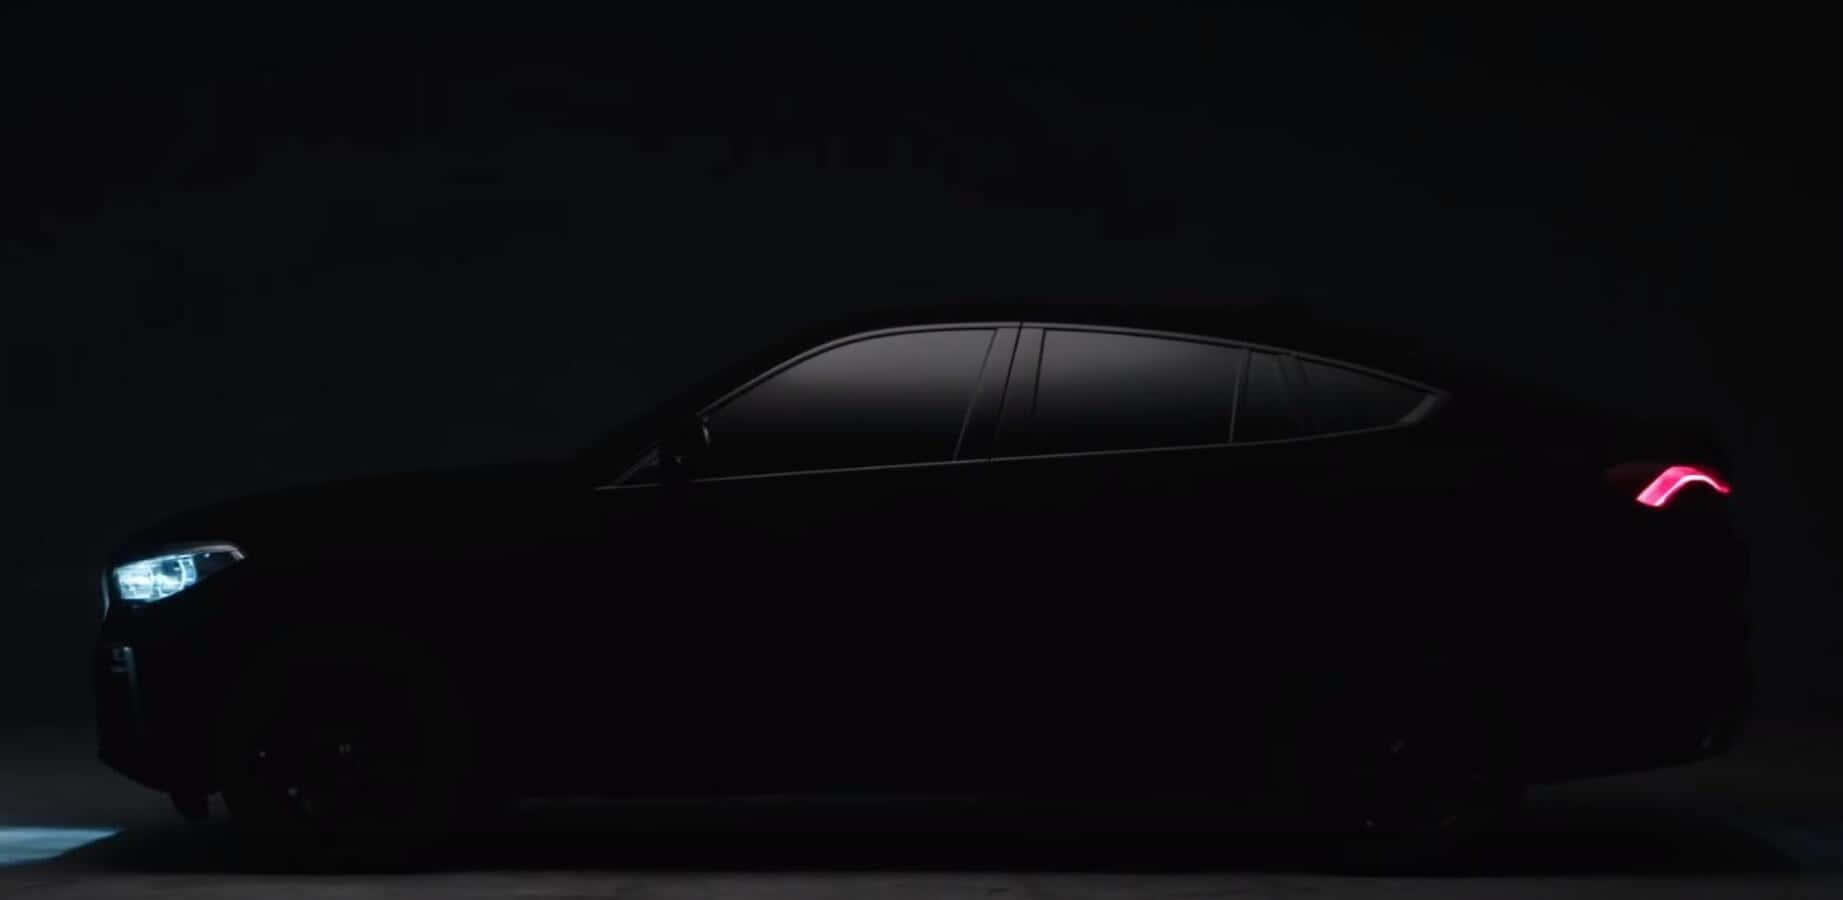 The Vantablack BMW X6 dons a slightly darker black - CNET